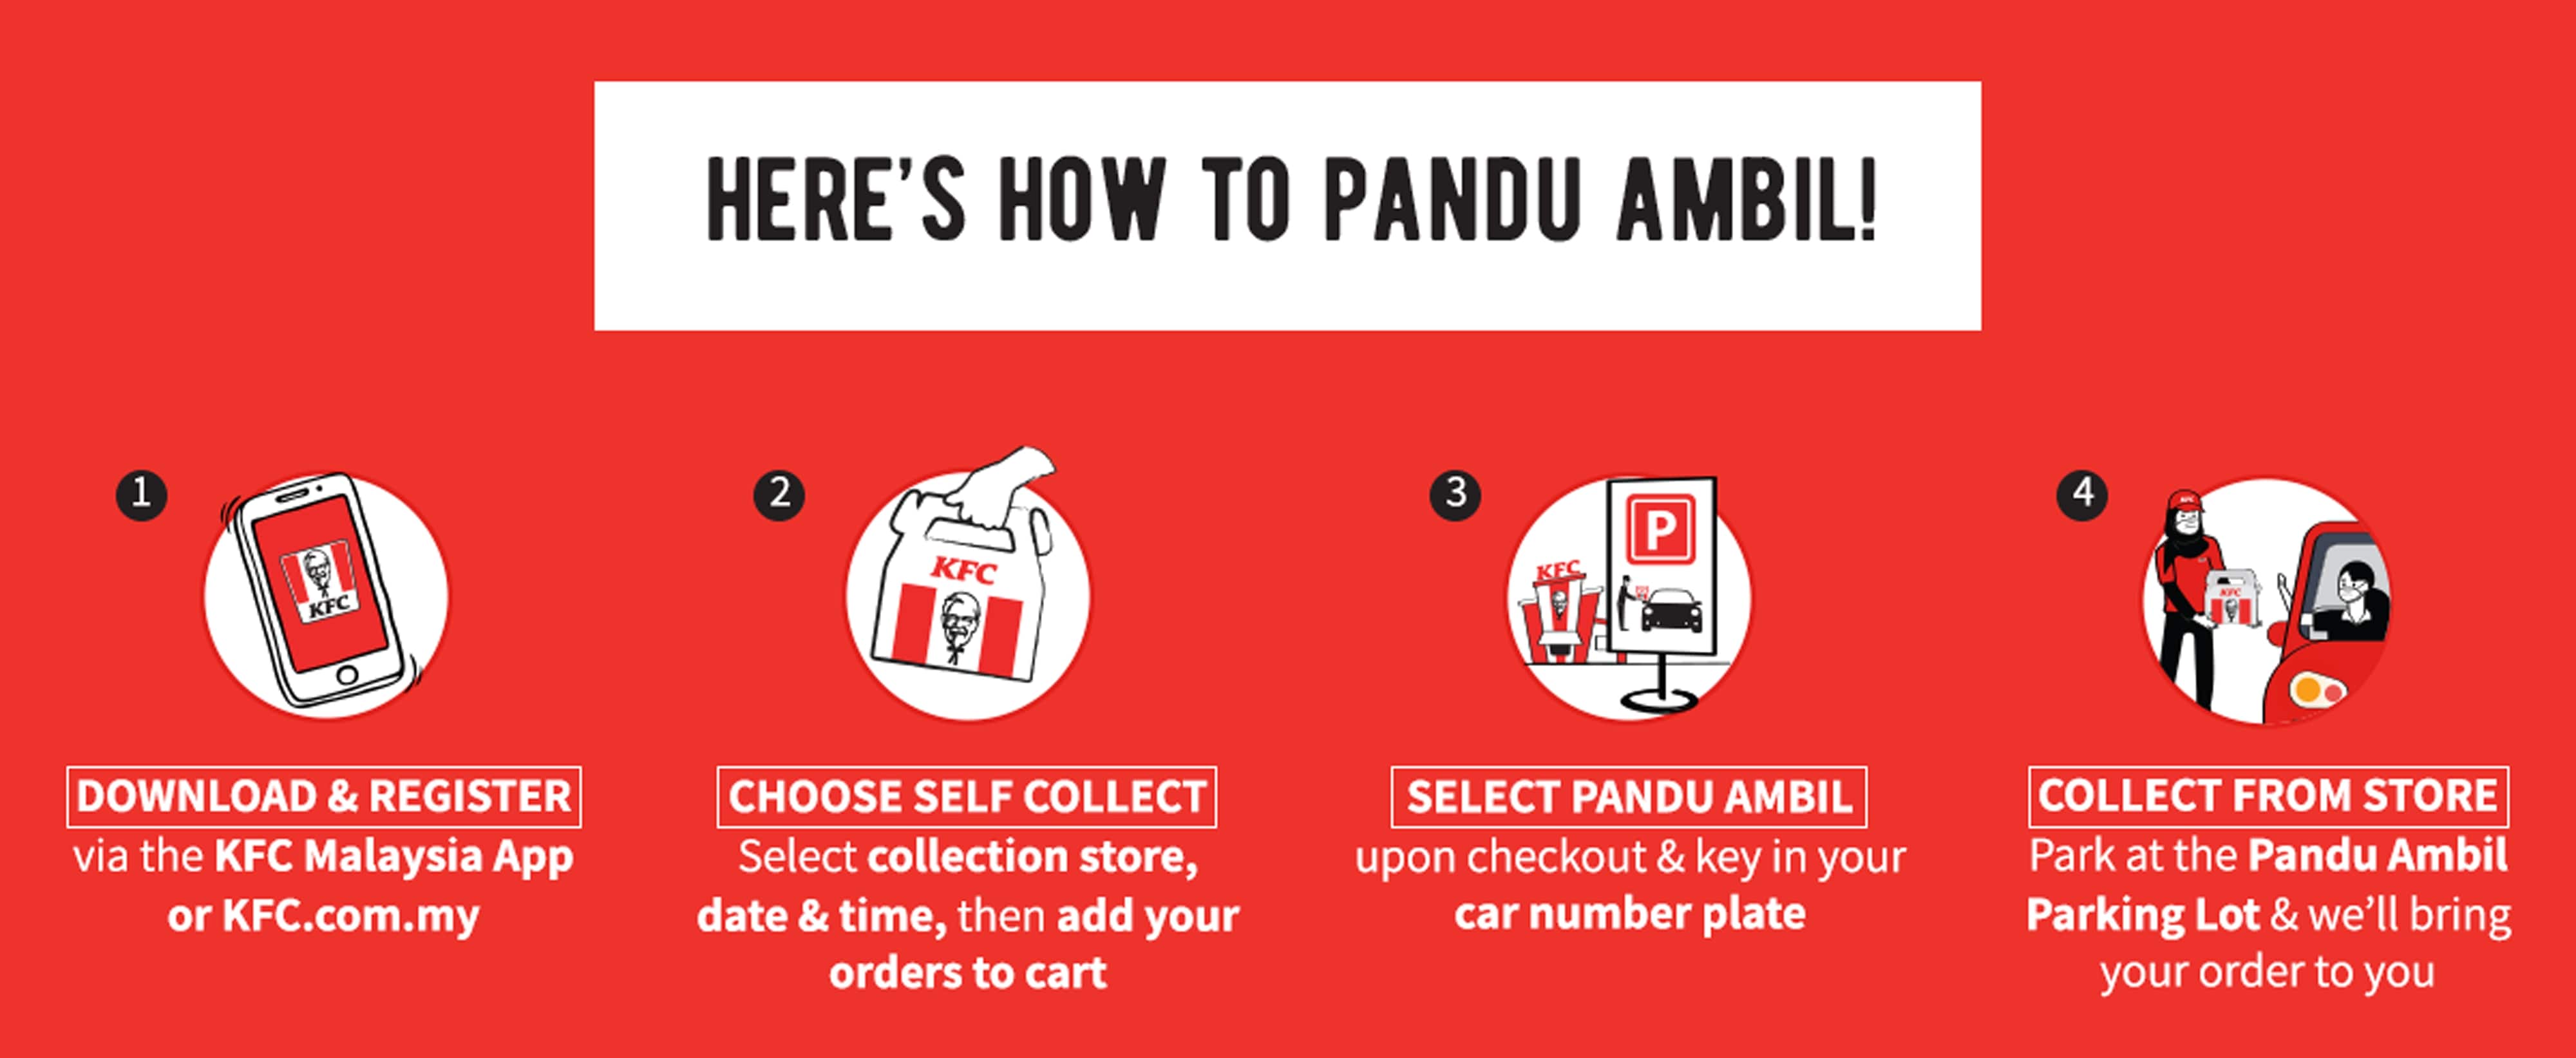 ‘Pandu Ambil’的点餐自取服务快捷又方便。-KFC提供-